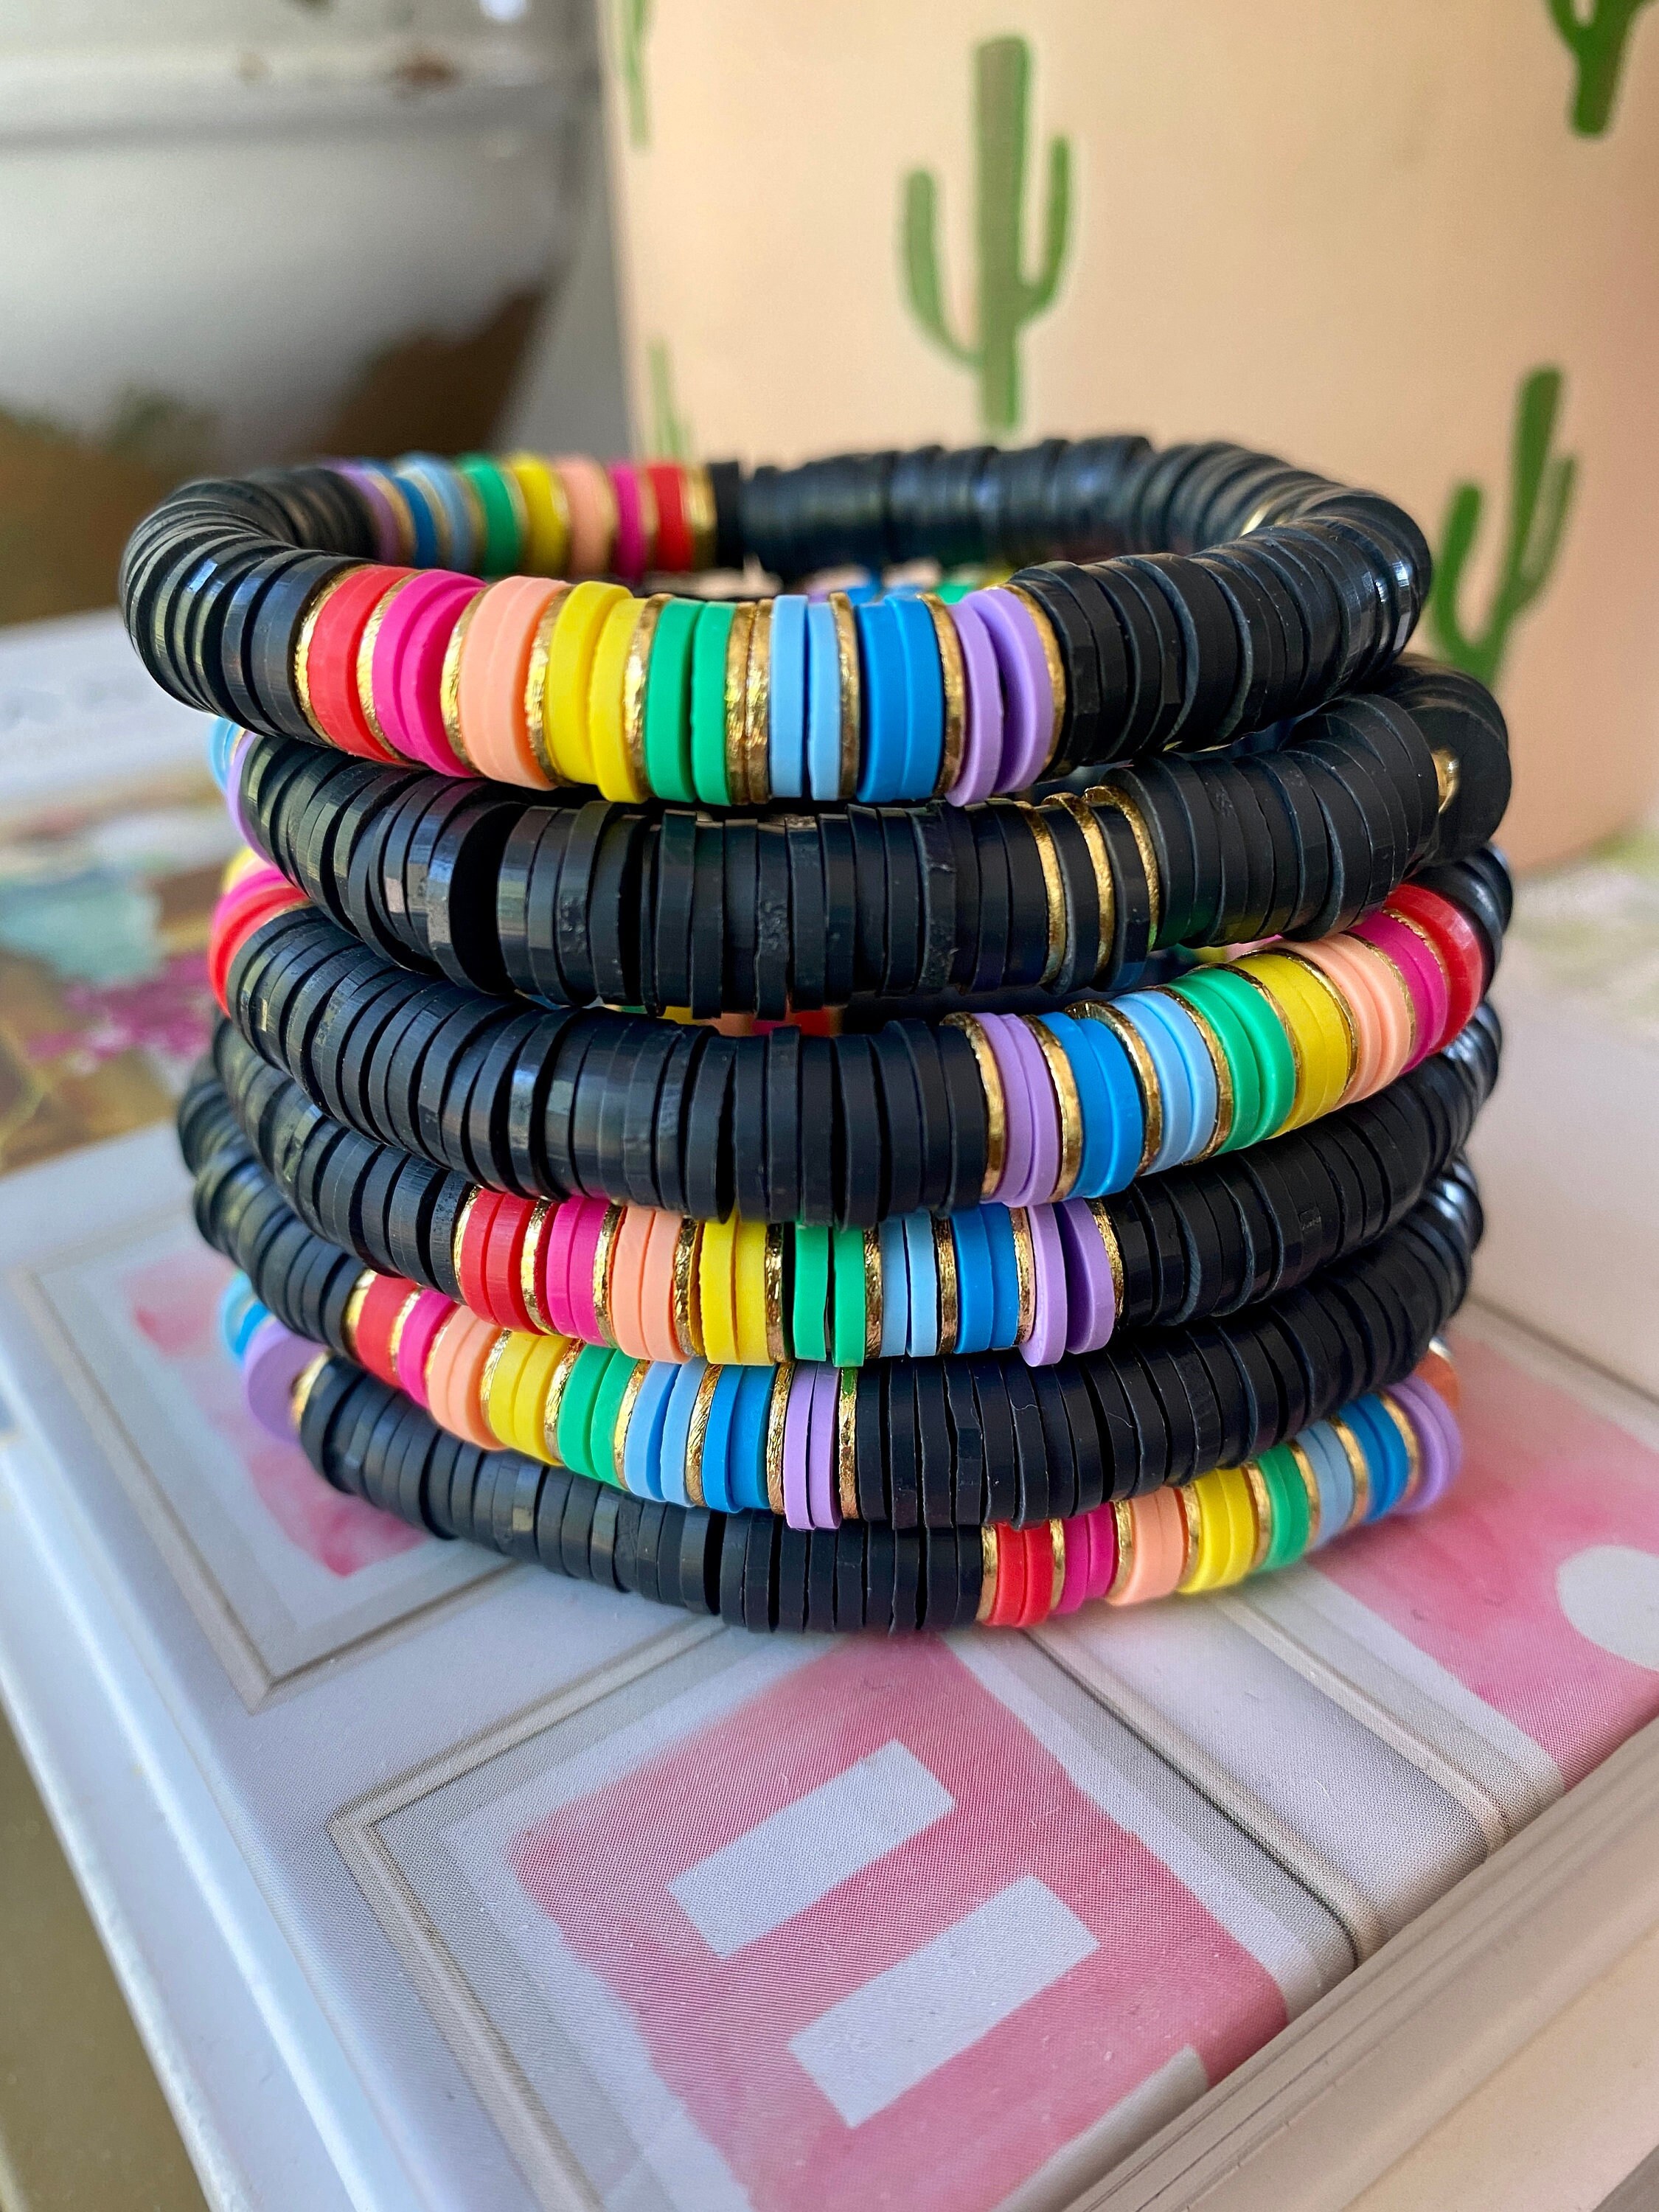 Rainbow Clay Bead Bracelet, SUTRAWEAR